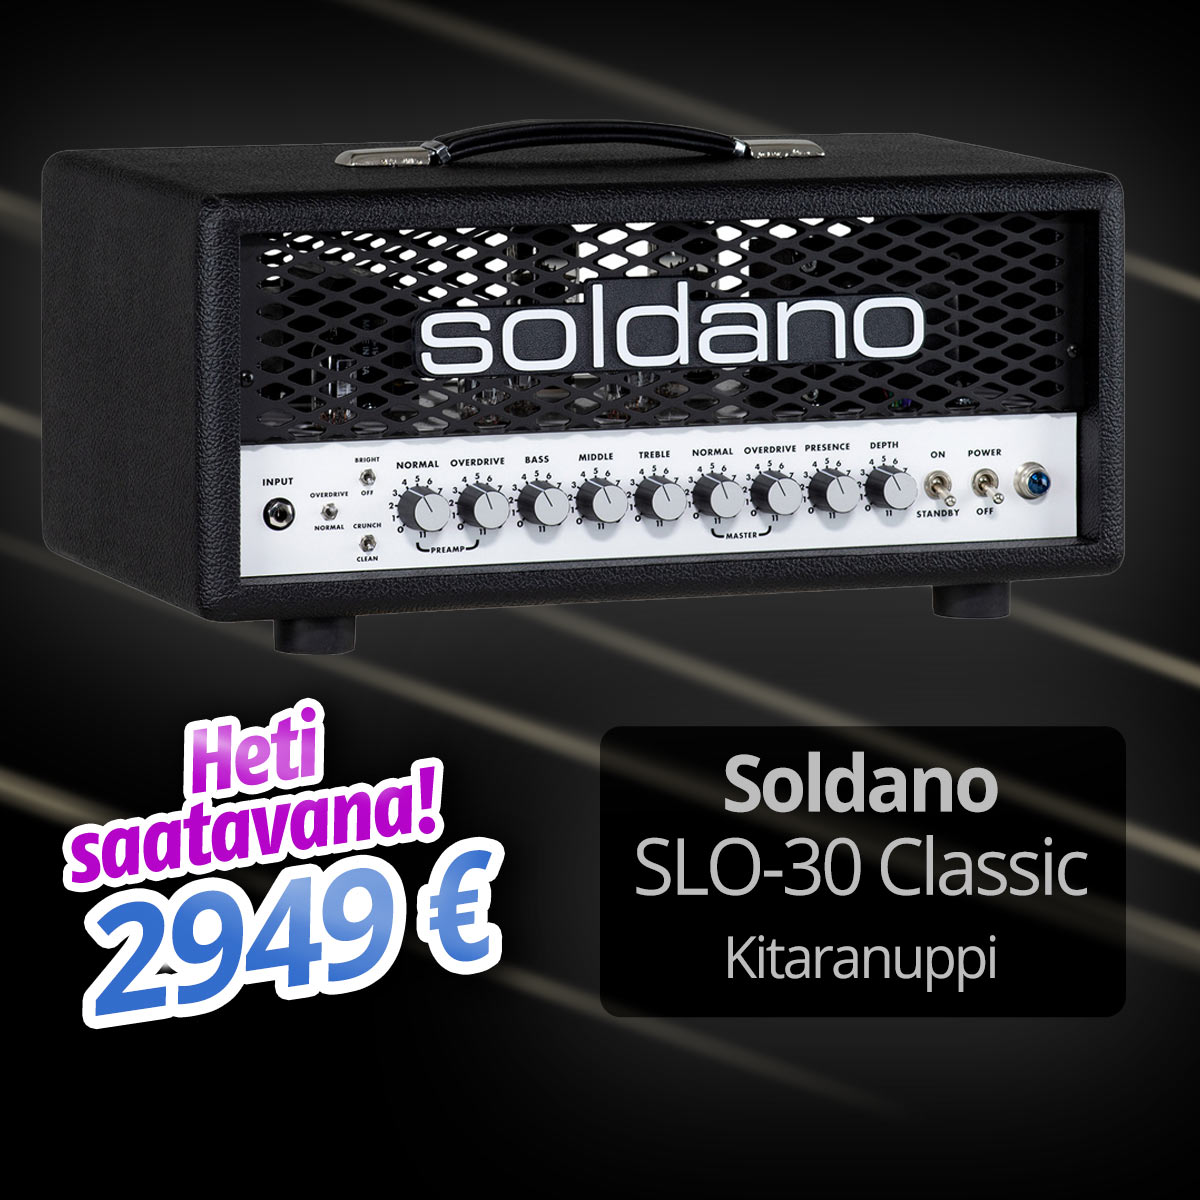 Soldano SLO-30 Classic kitaranuppi - 2949 € - Heti saatavana!